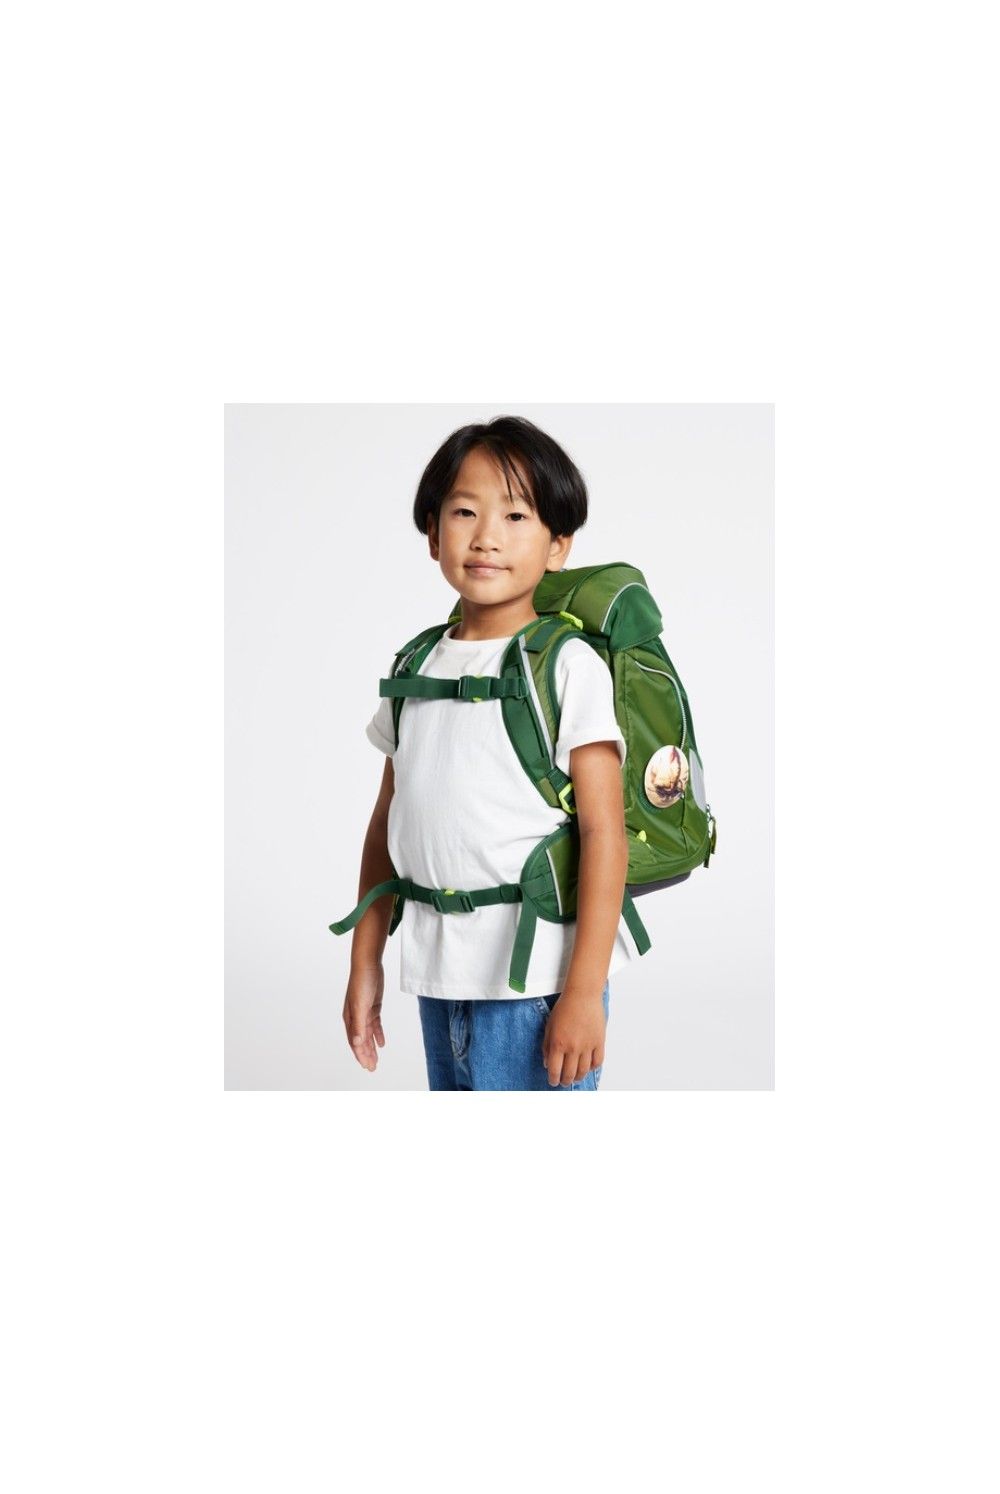 ergobag pack school backpack set Green MamBear